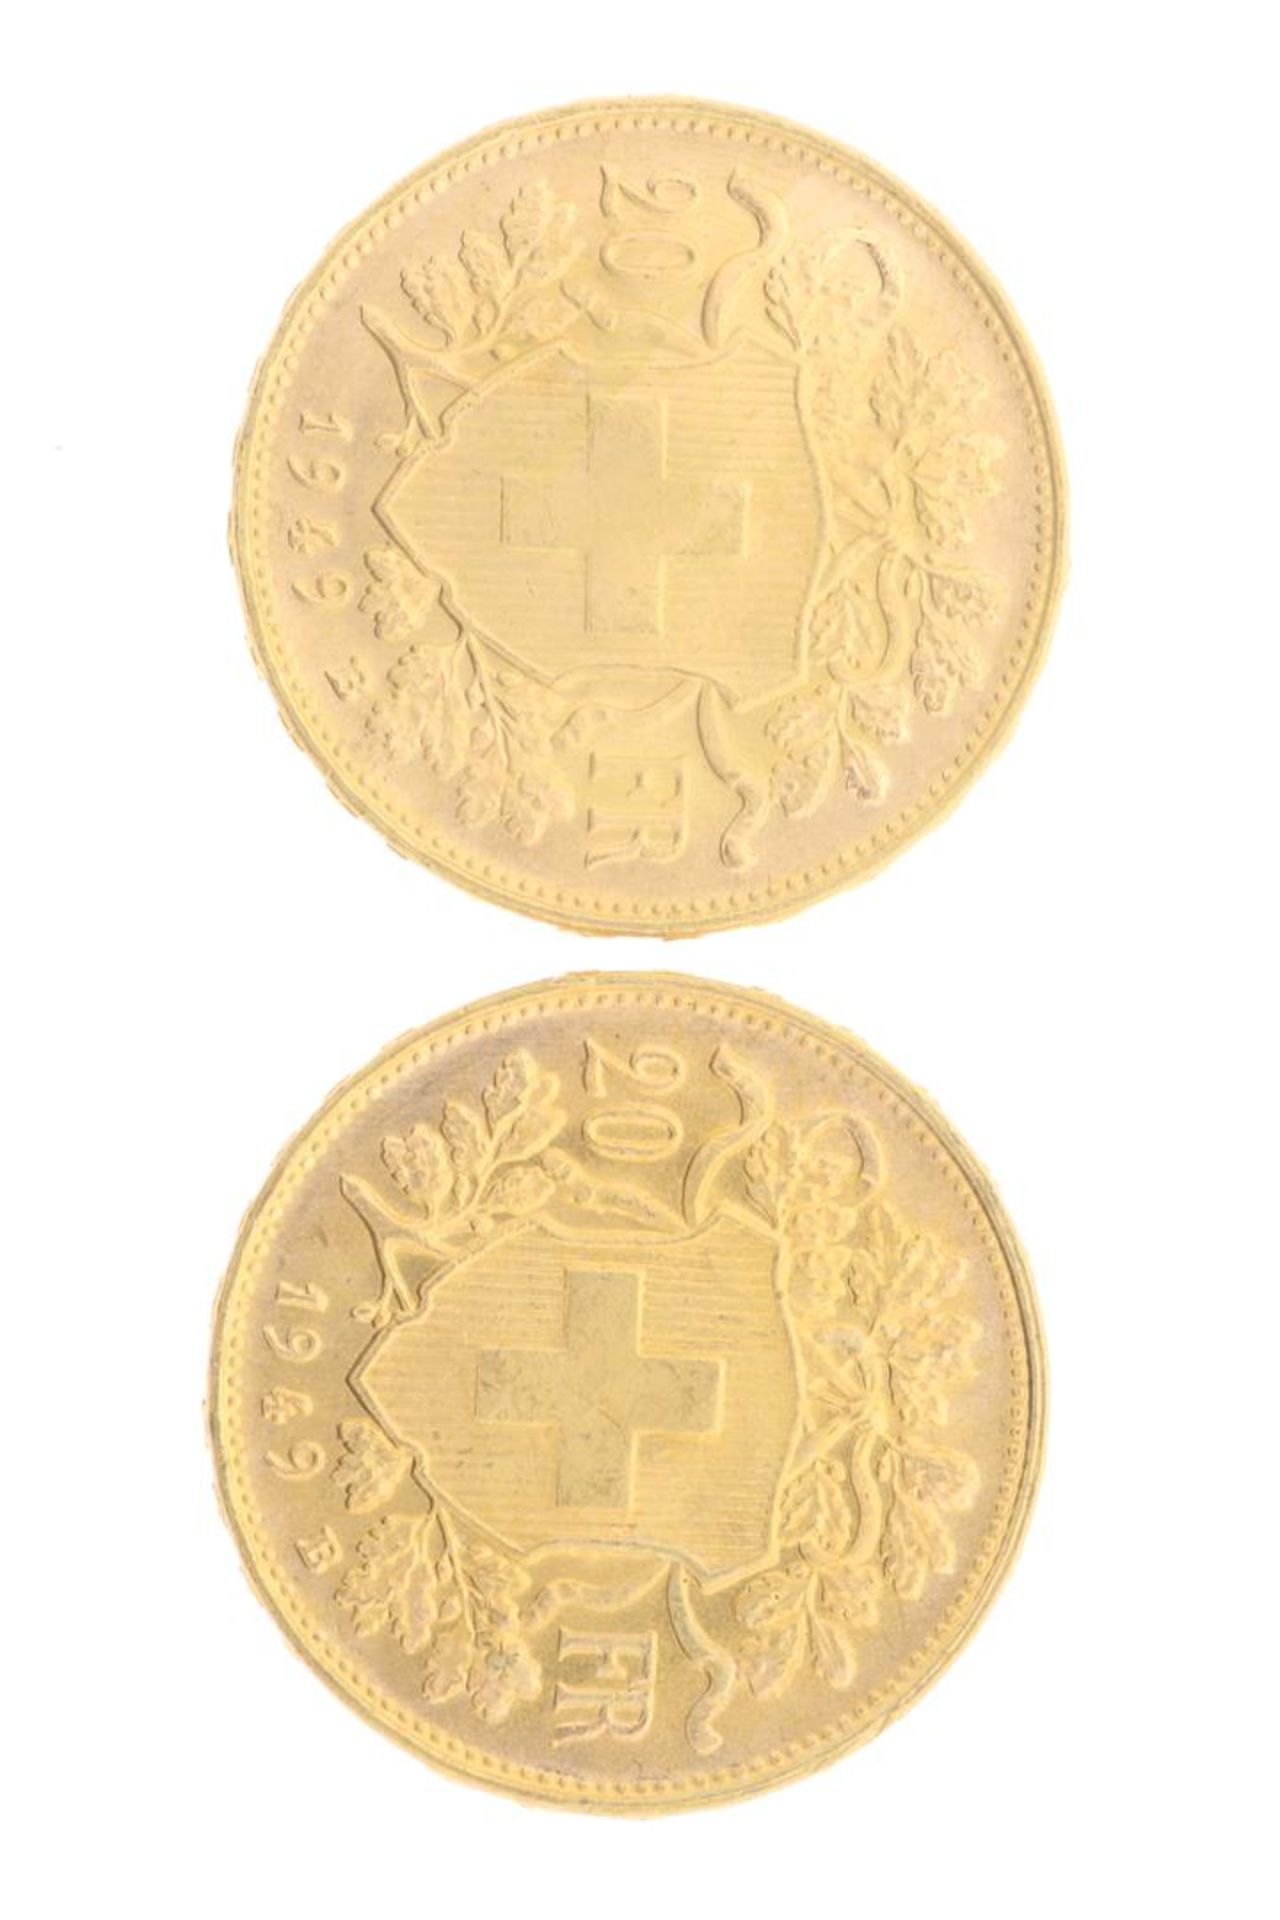 2 gold 20 Franc pieces of Helvetia